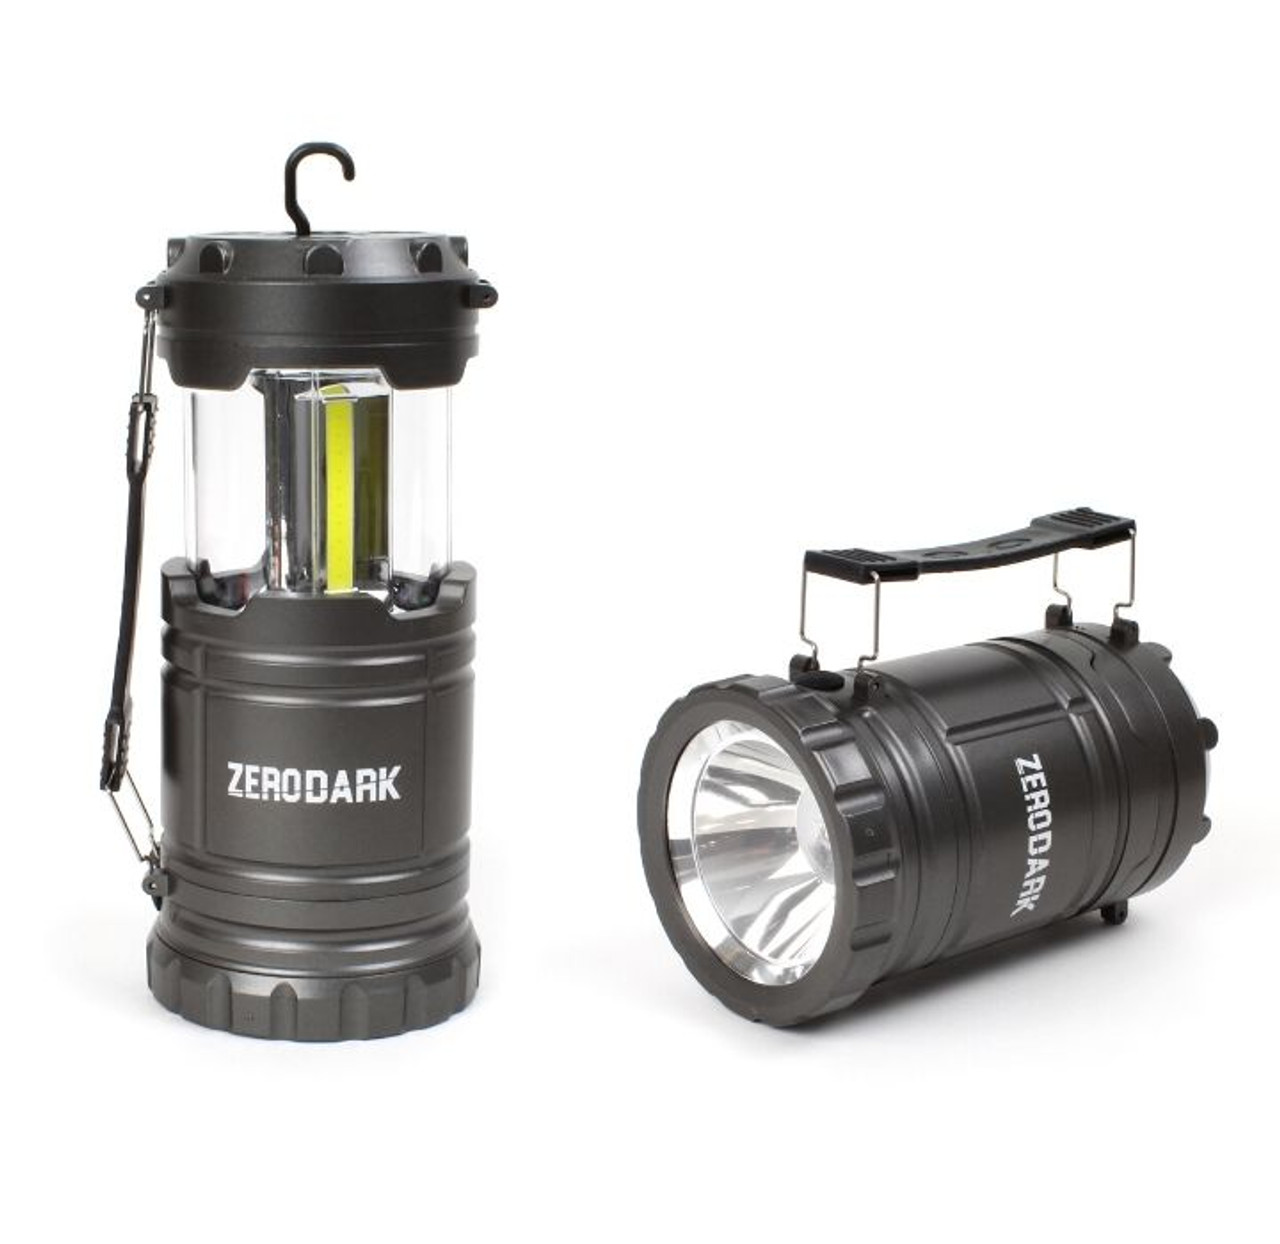 ZeroDark 2-in-1 Collapsible Lantern & Flashlight product image